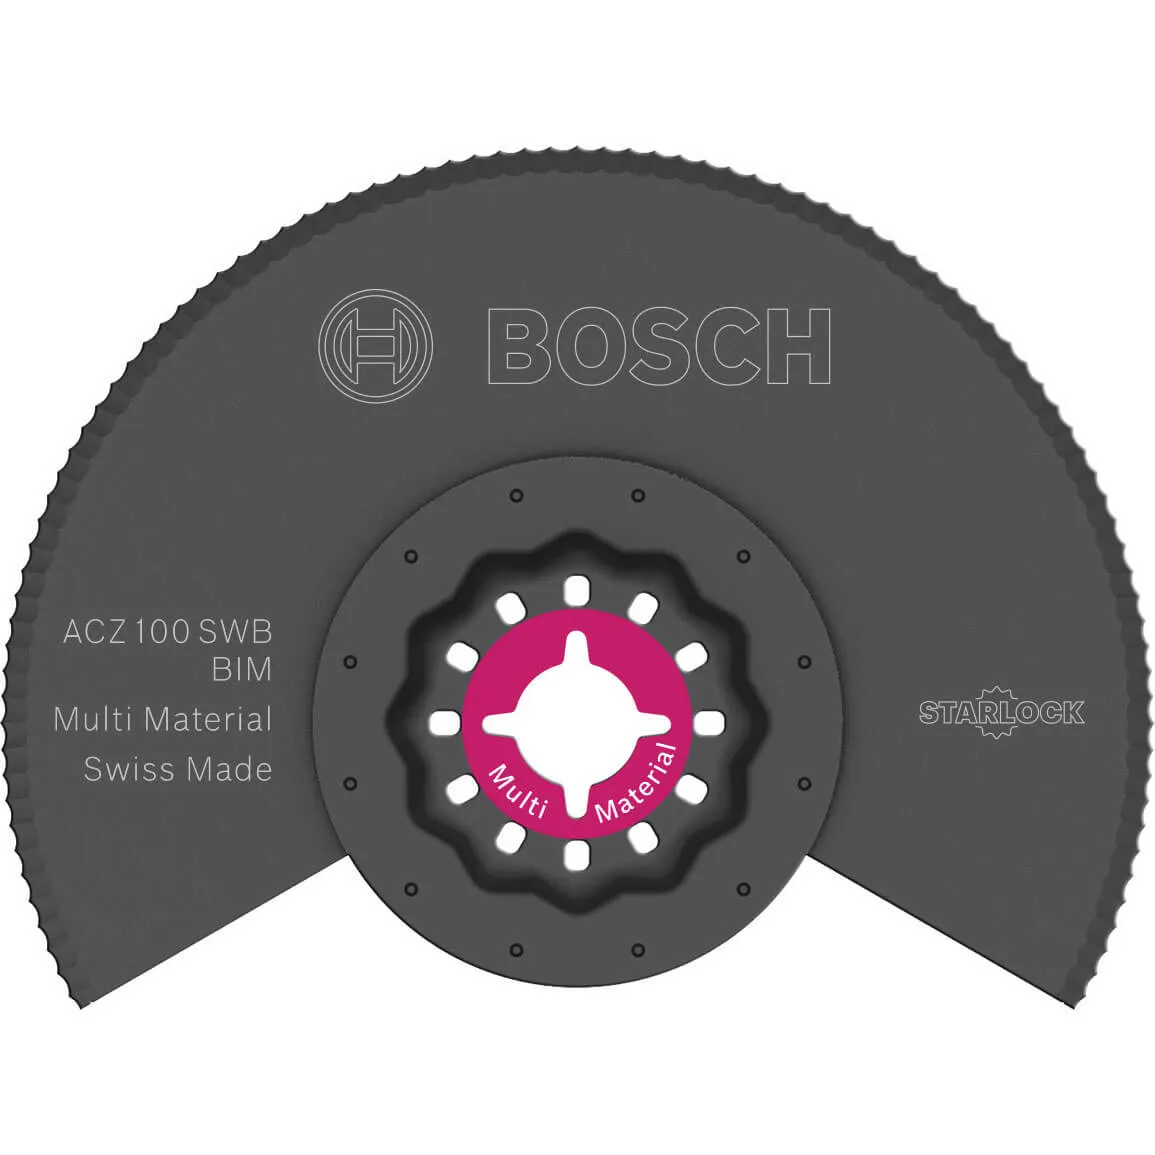 Bosch ACZ 100 SWB Multi Material Oscillating Multi Tool Segment Saw Blade - 100mm, Pack of 1